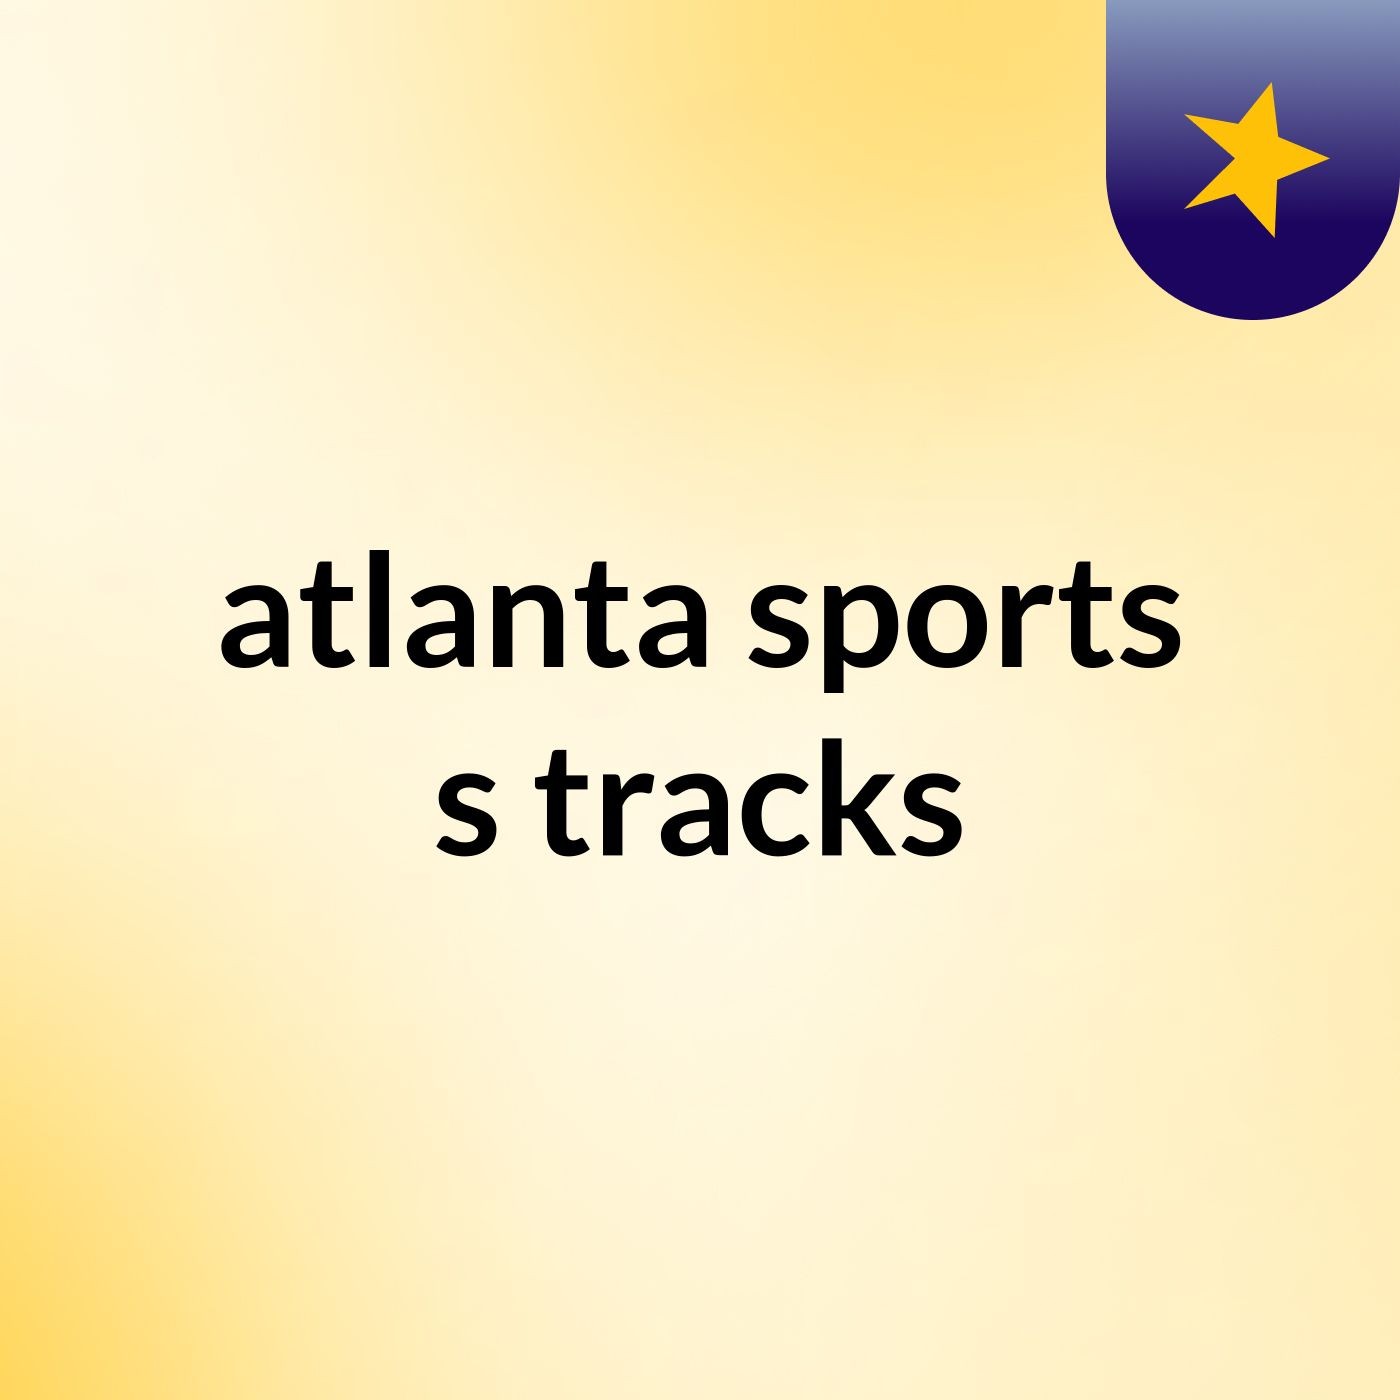 atlanta sports's tracks